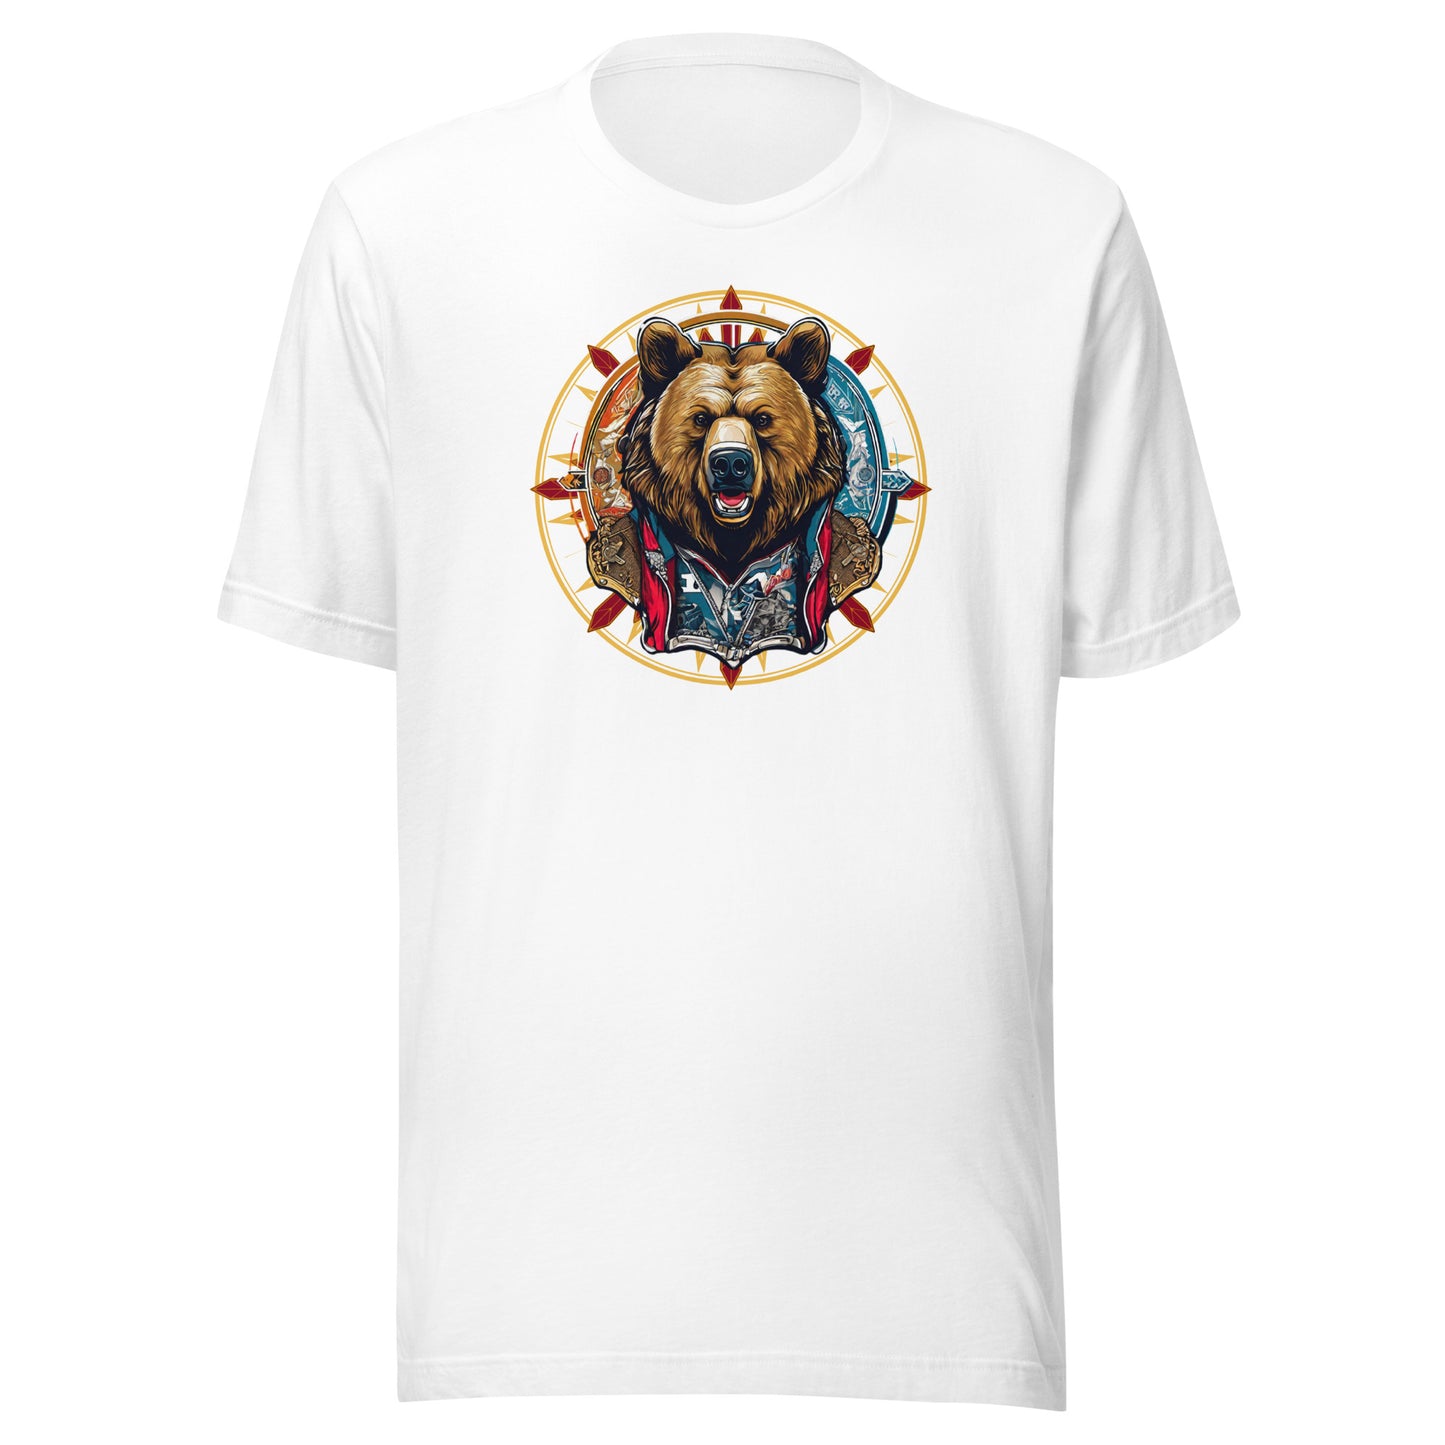 Bear Emblem Men's Graphic T-Shirt White